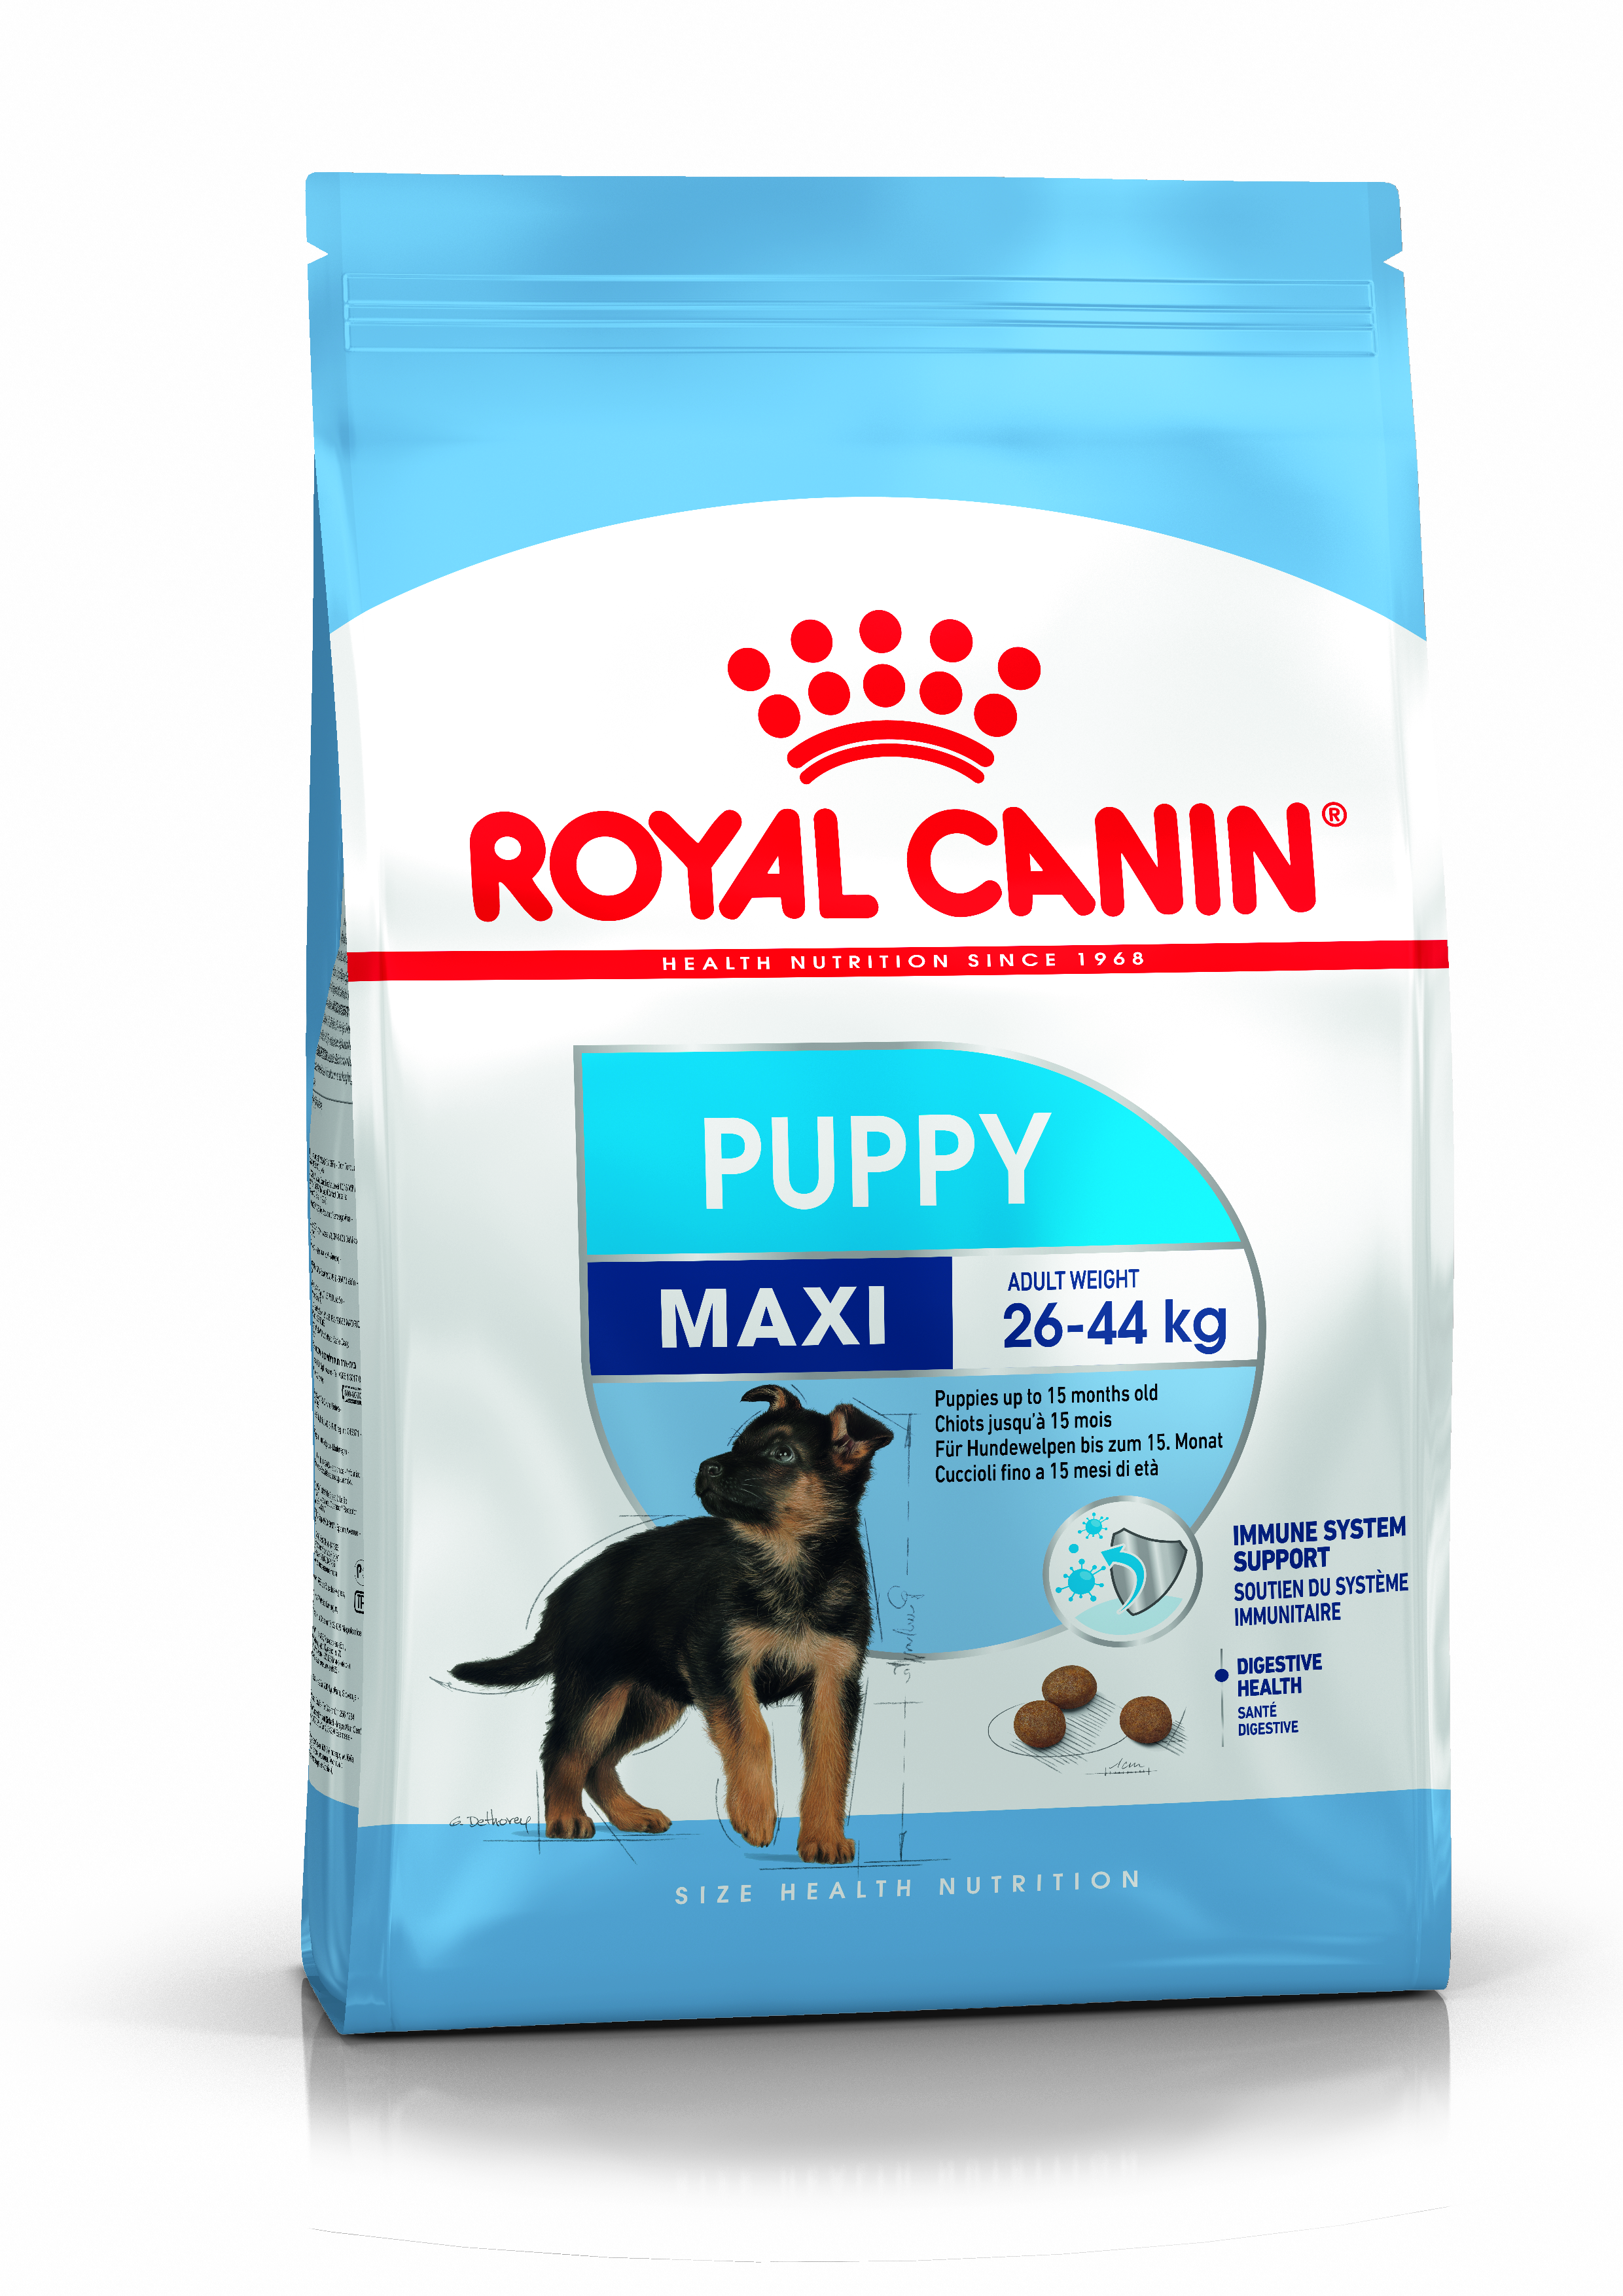 Royal canin maxi mature